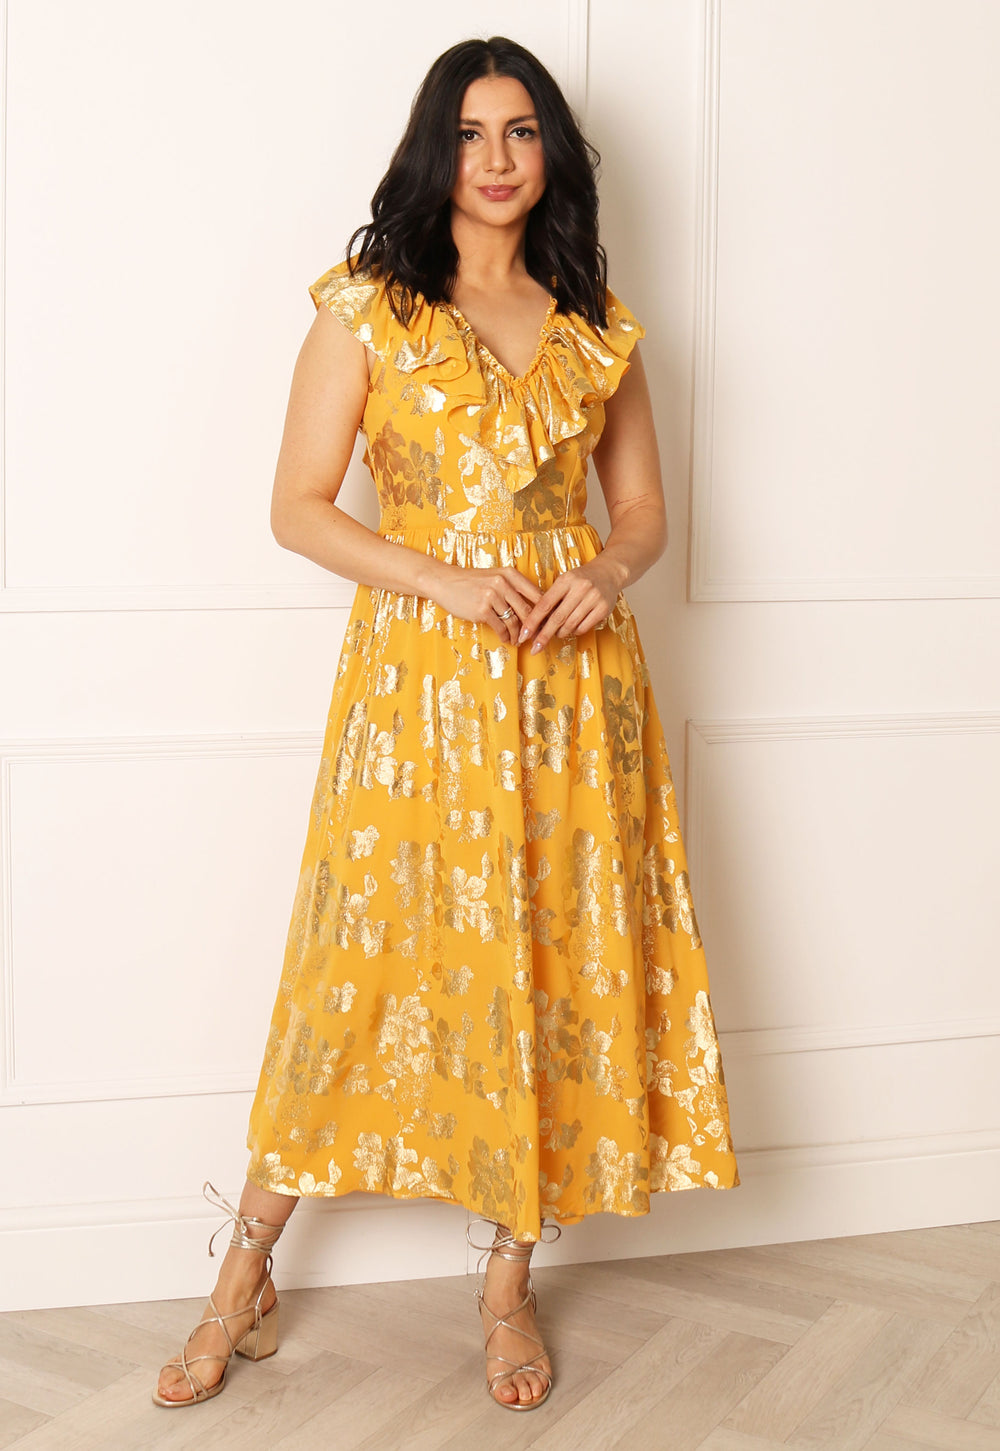 Blossom Net eftertænksom VILA Jaya Floral Print Frill Edge Midi-kjole i gul & guldfolie | One Nation  Clothing VILA Jaya Blomsterprint Frill Edge Midi-kjole i gul & guldfolie